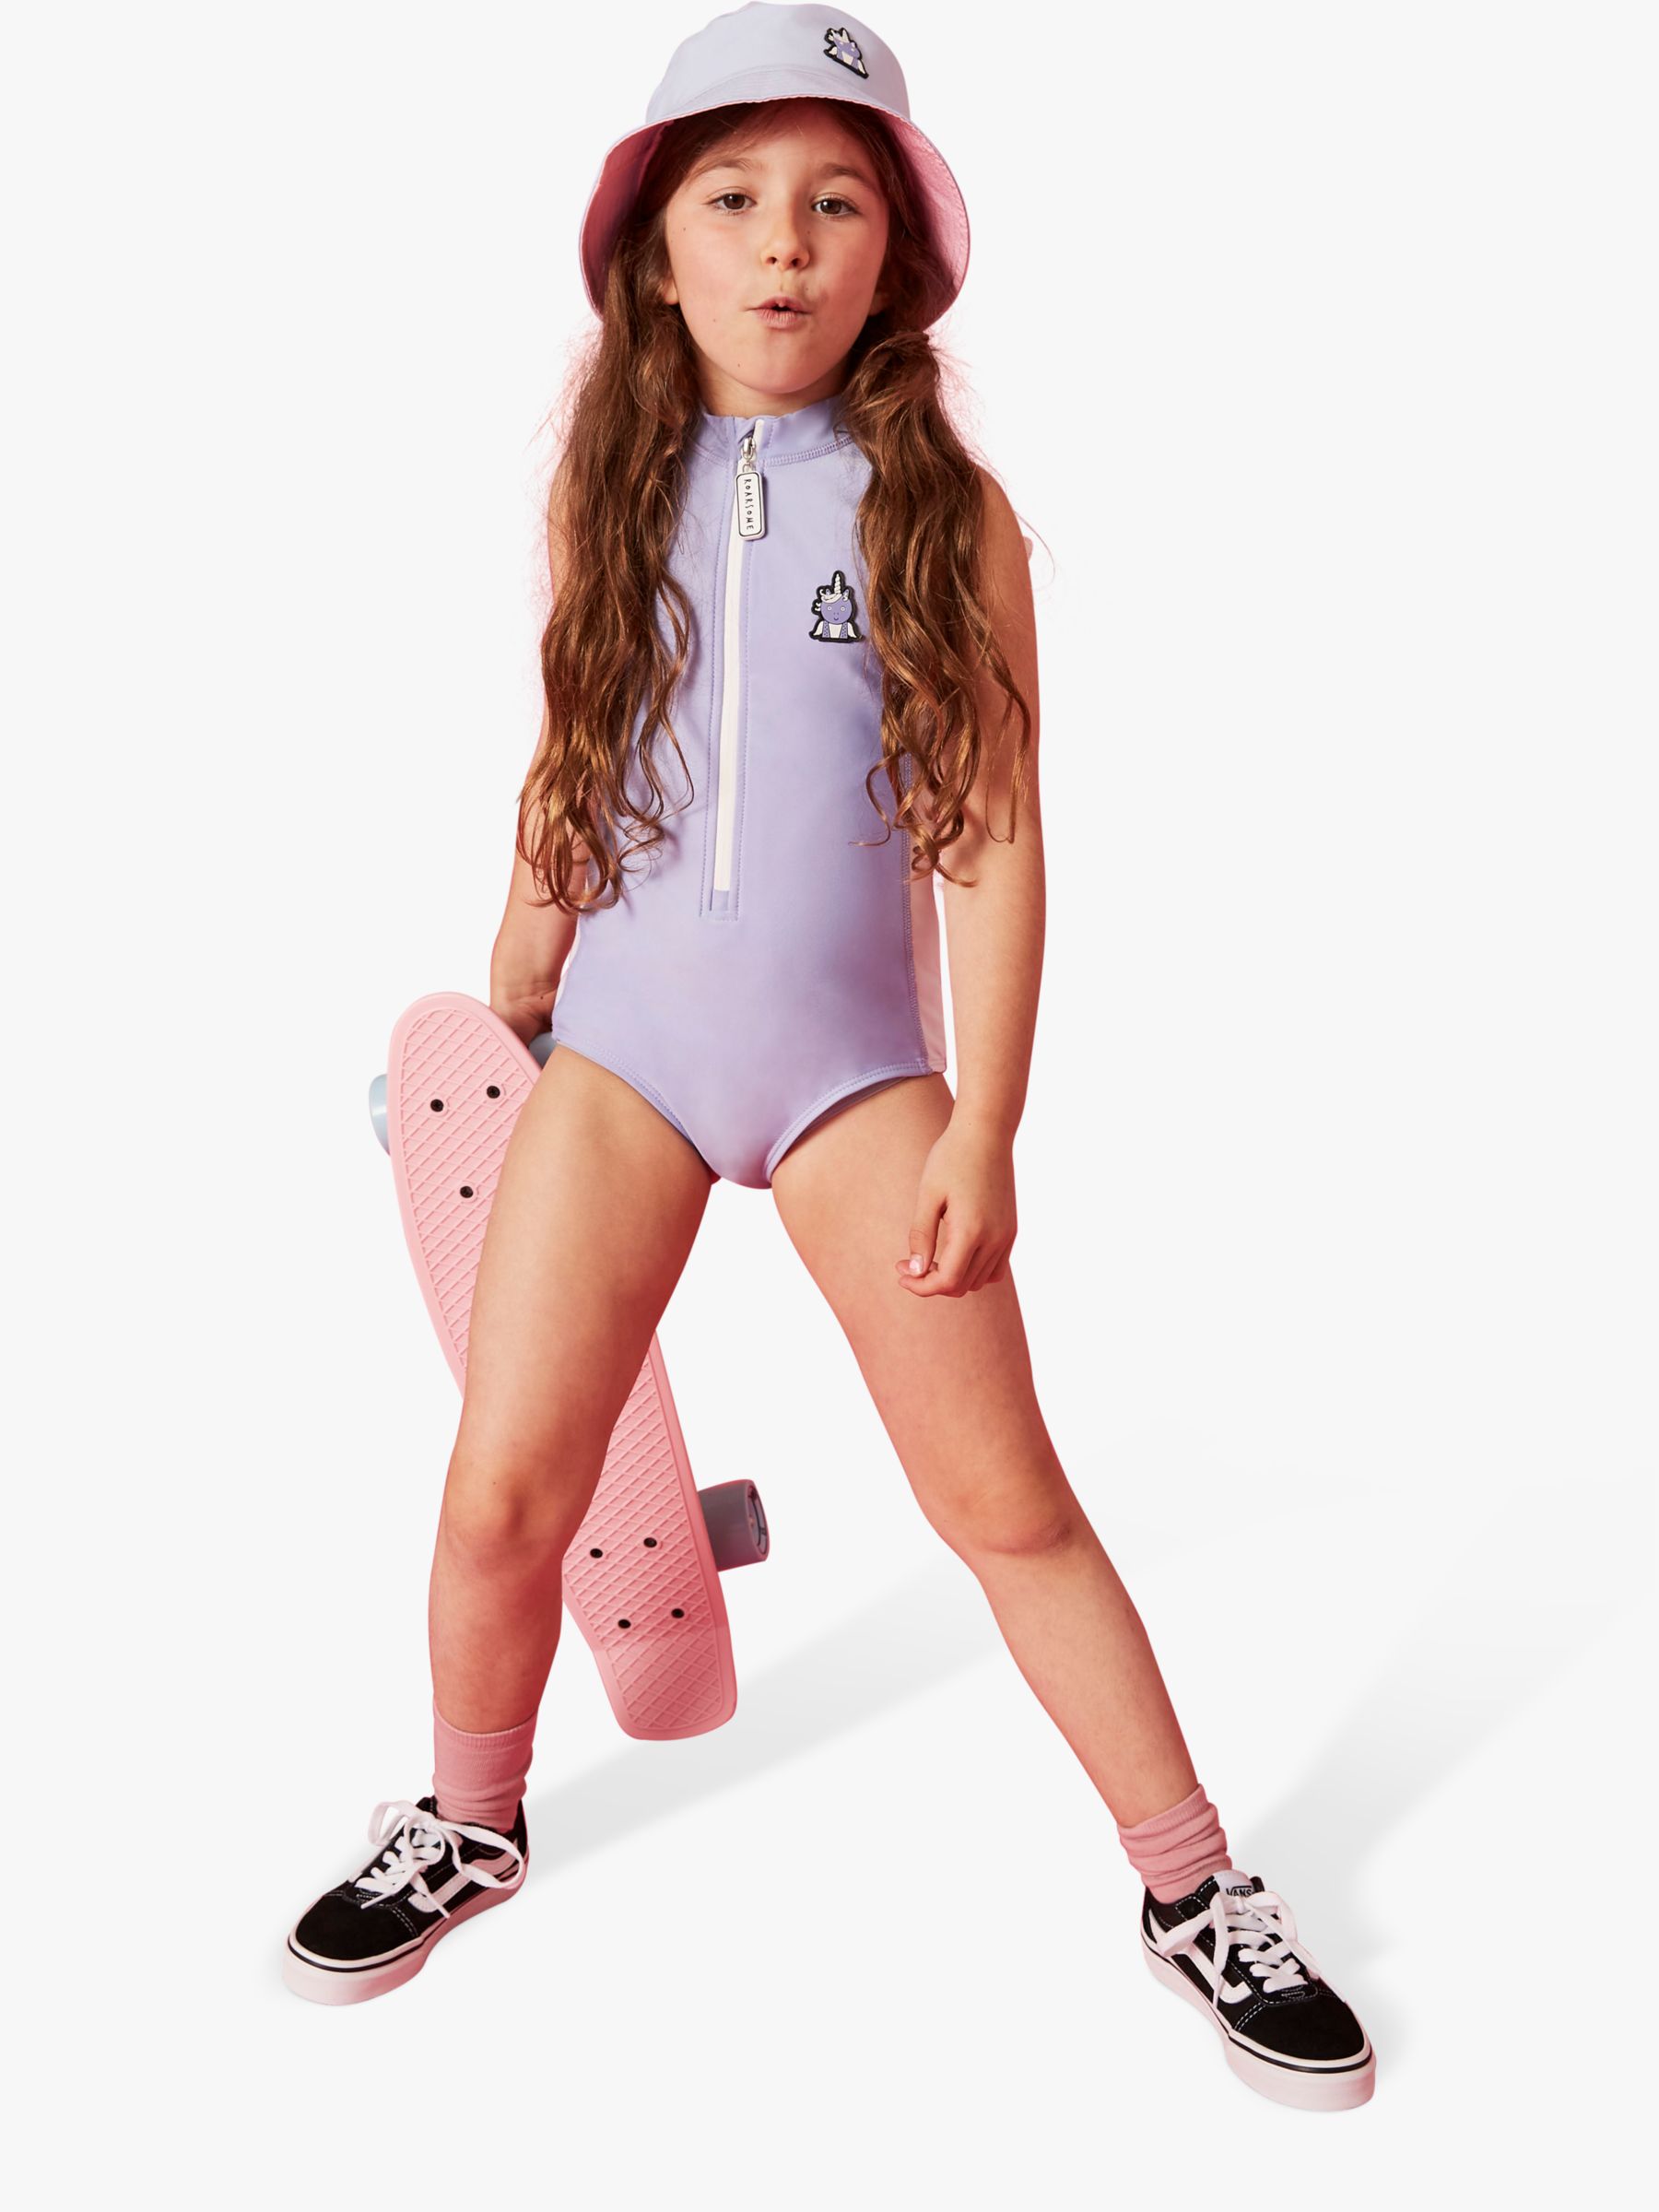 Roarsome Kids' Sparkle Swim Suit, Lilac, 1-2 years